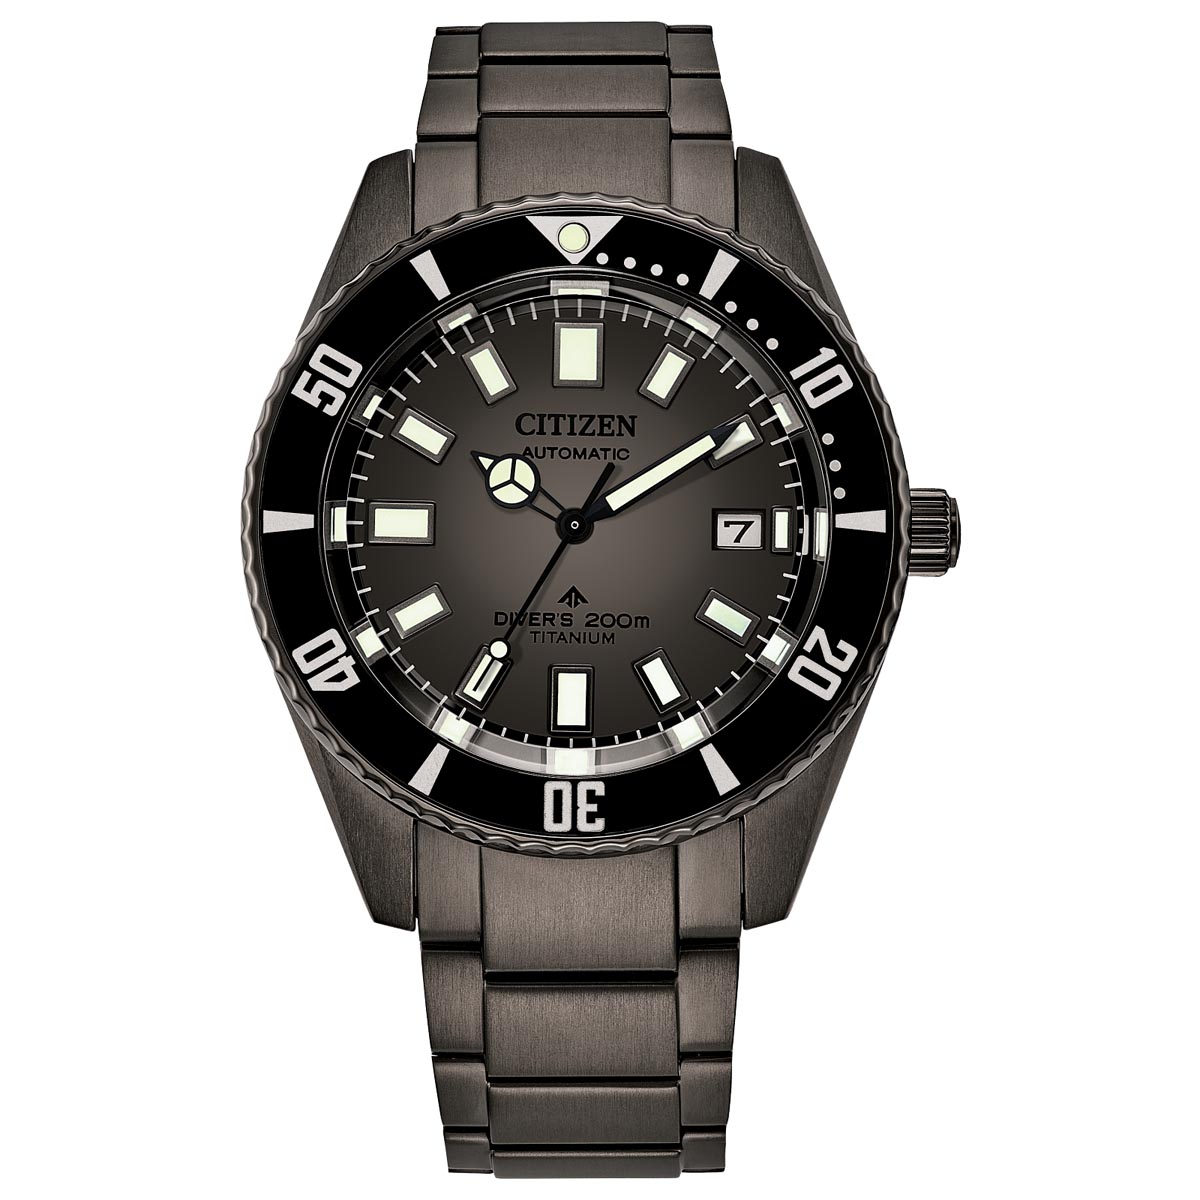 Citizen Promaster Fujitsubo Mens Watch with Black Dial and Super Titanium™ Bracelet (automatic movement)